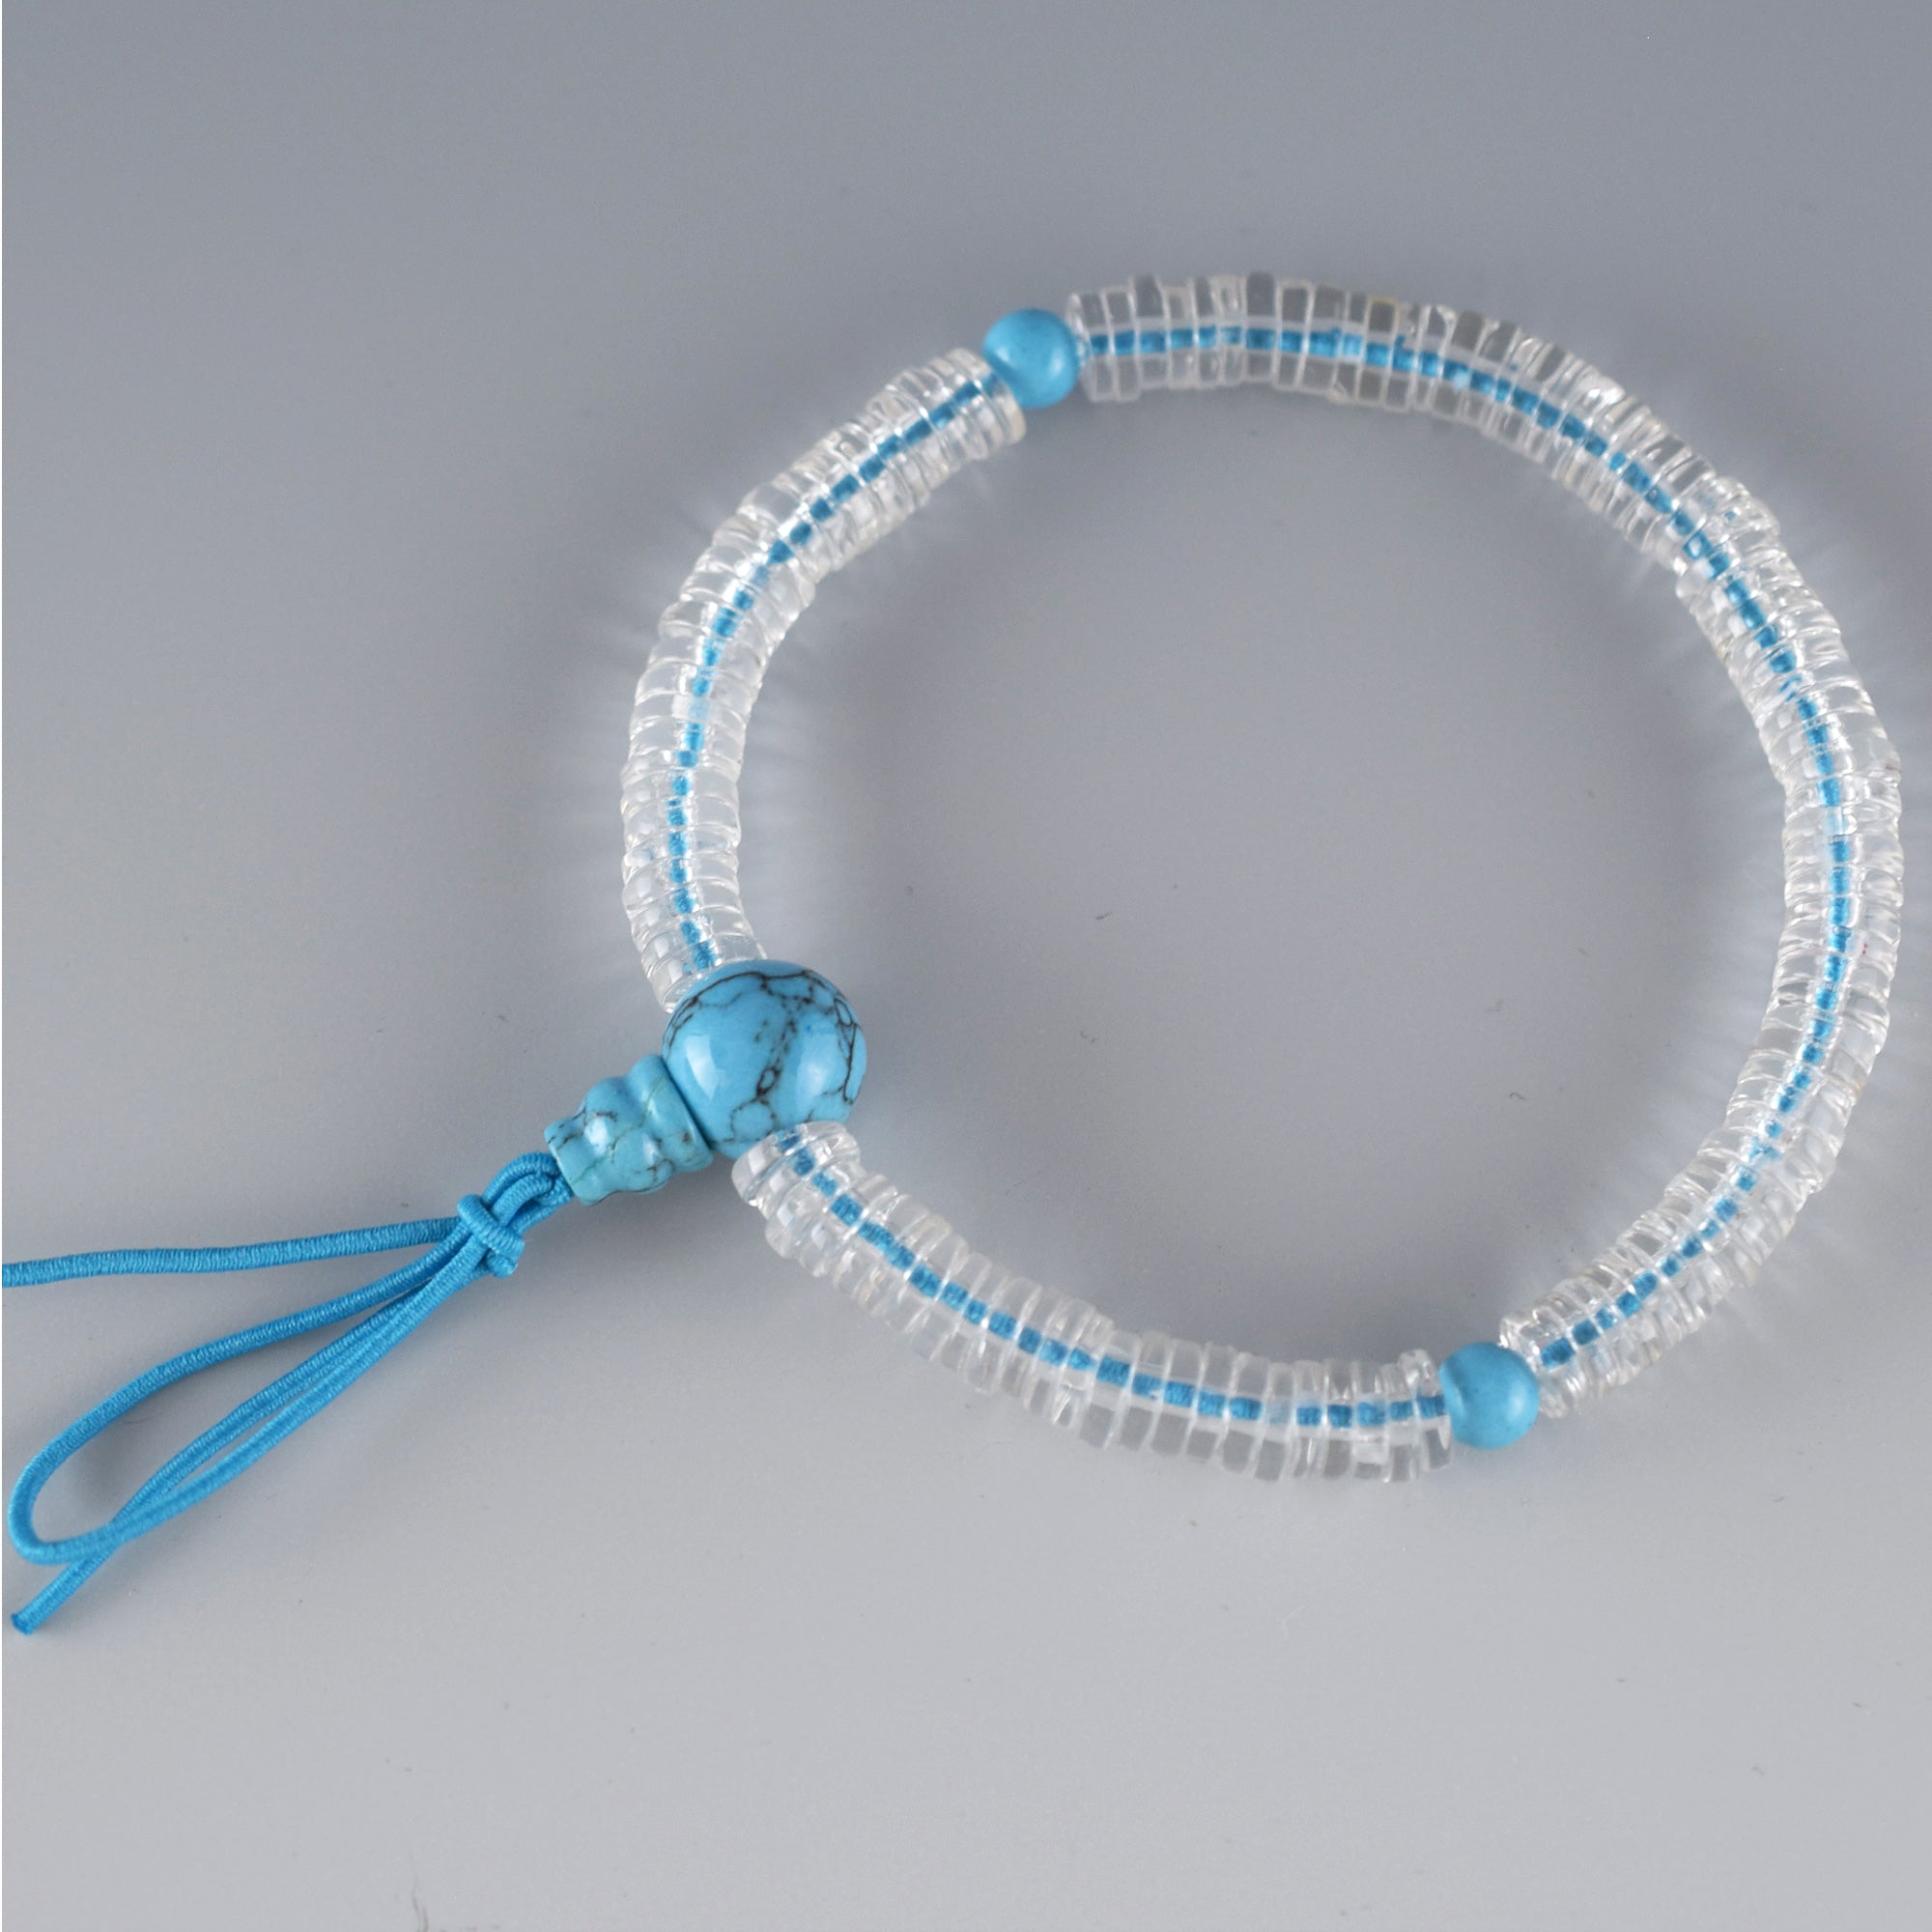 6mm 108 beads Crystal & Turquoise Bracelet